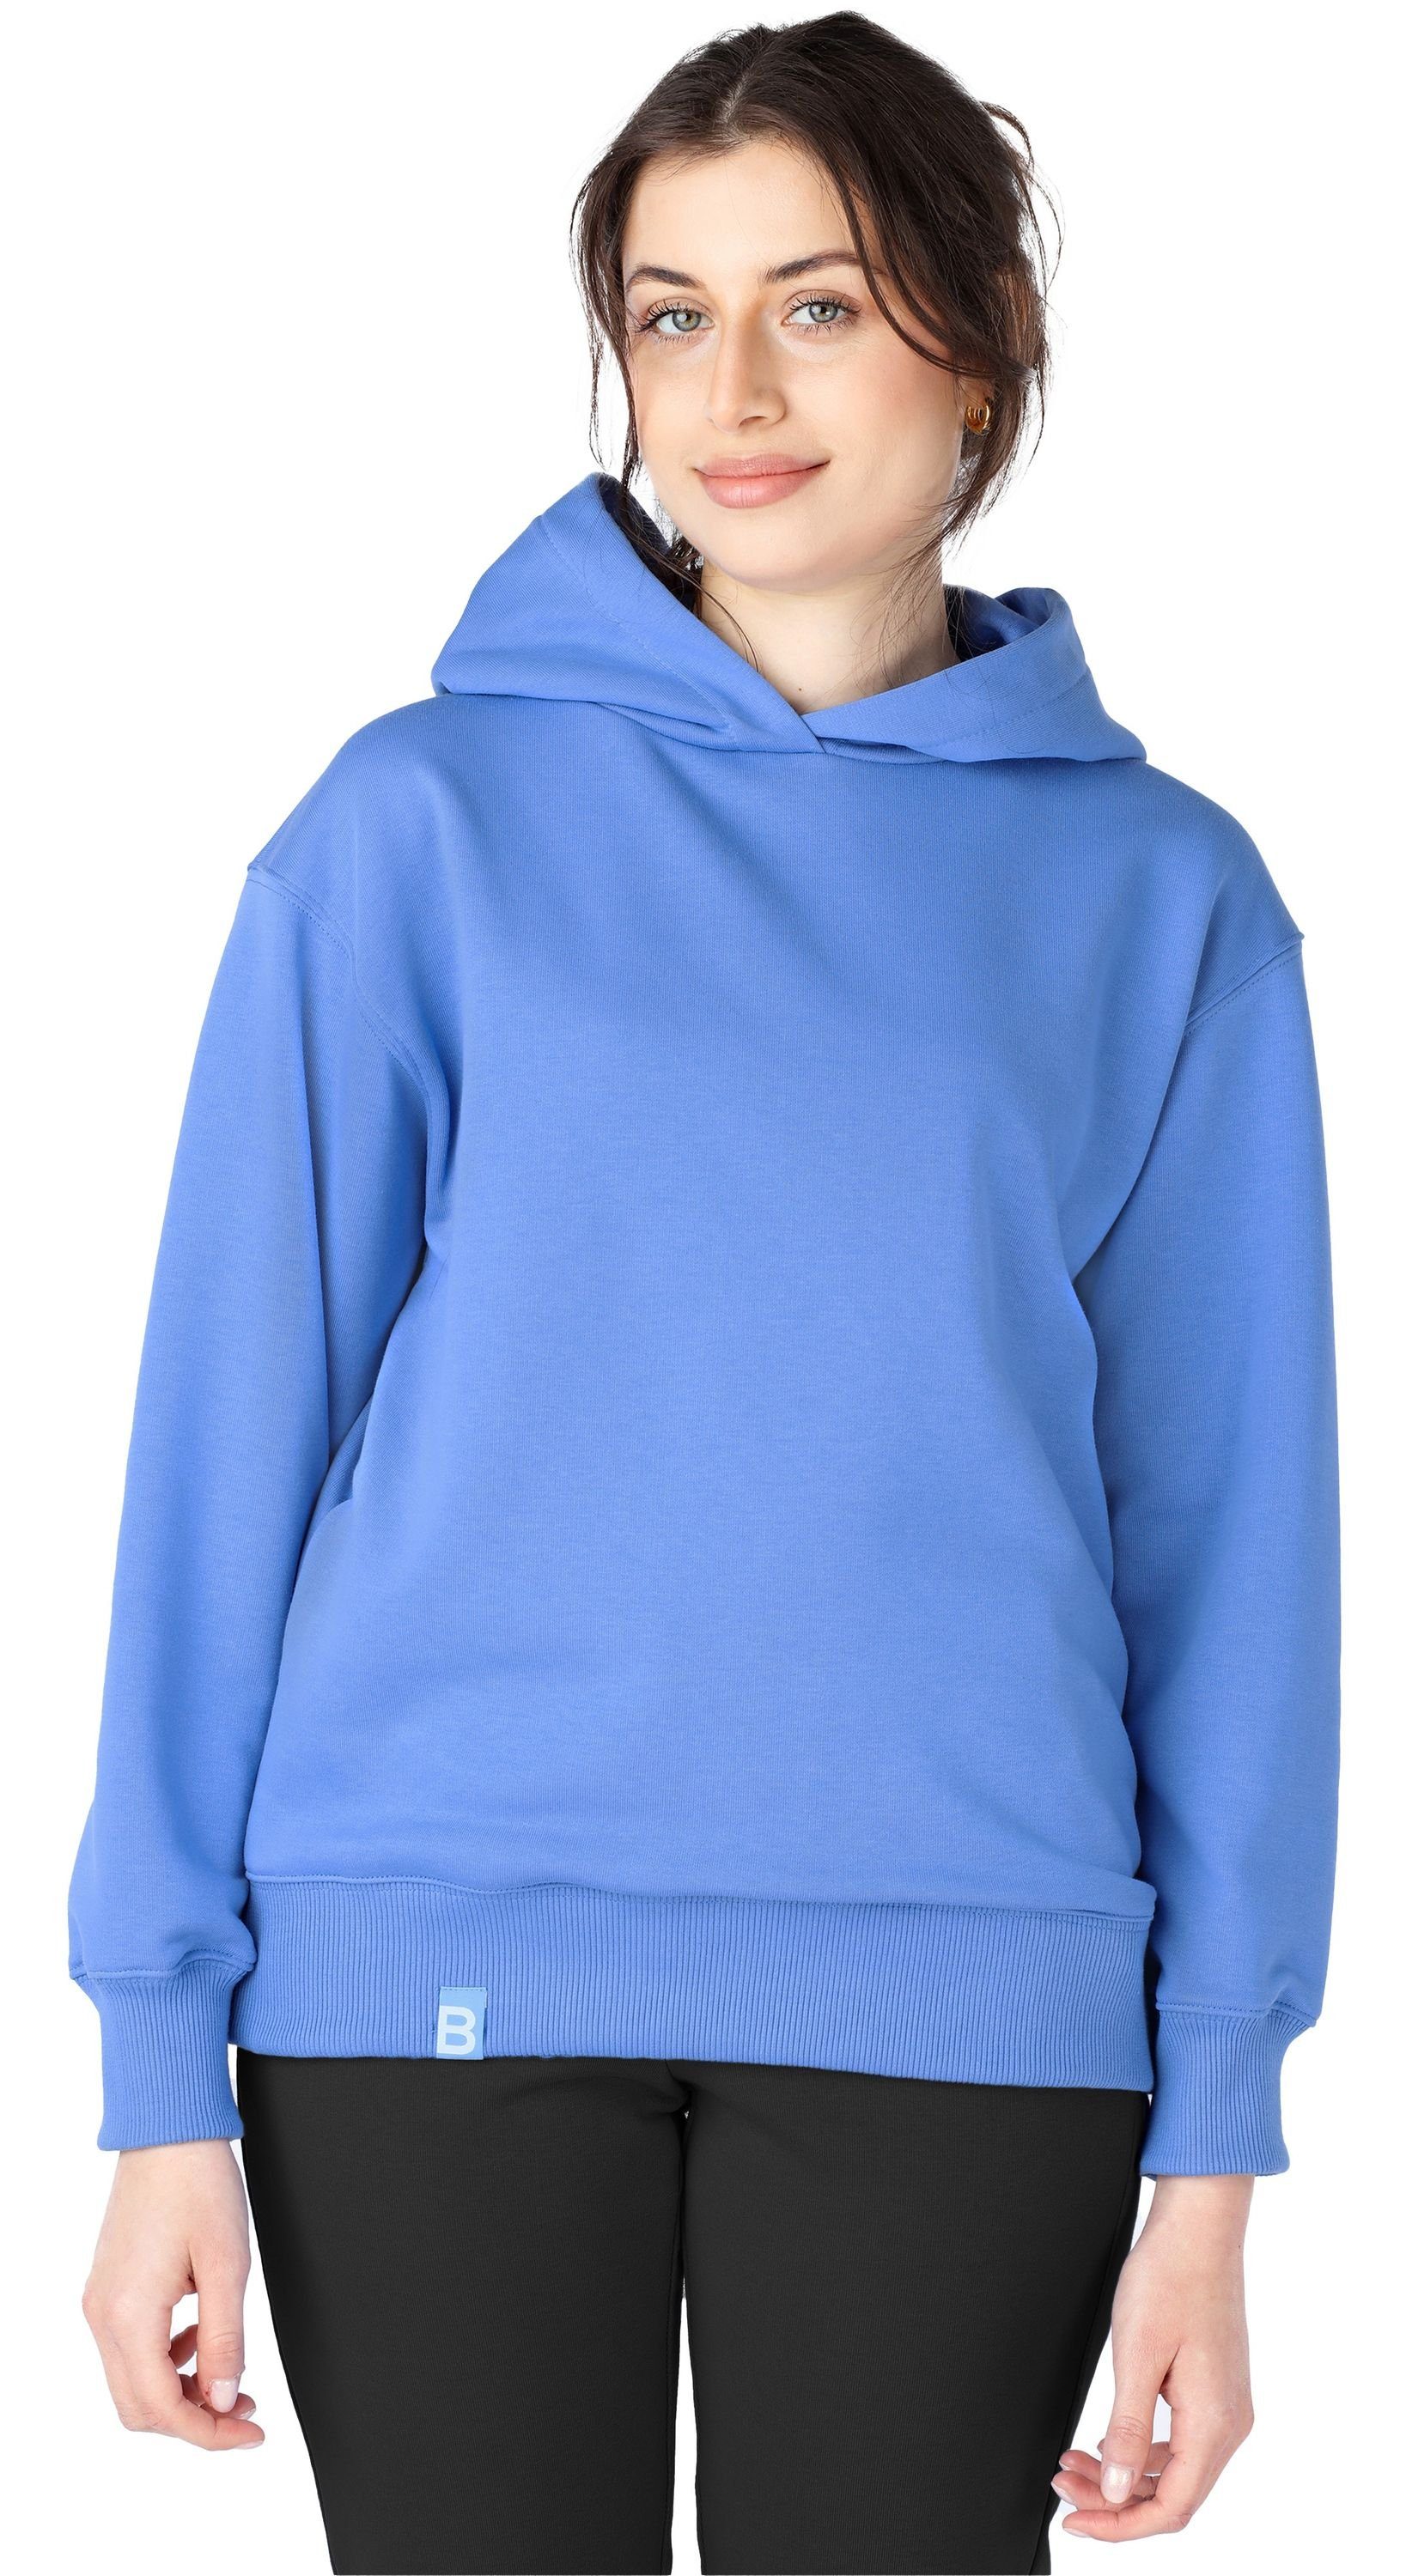 BLV210 Oberteil Pullover Blau Kapuzenpullover lang Damen Bellivalini Kapuzensweatshirt Hoodie Sportanzug